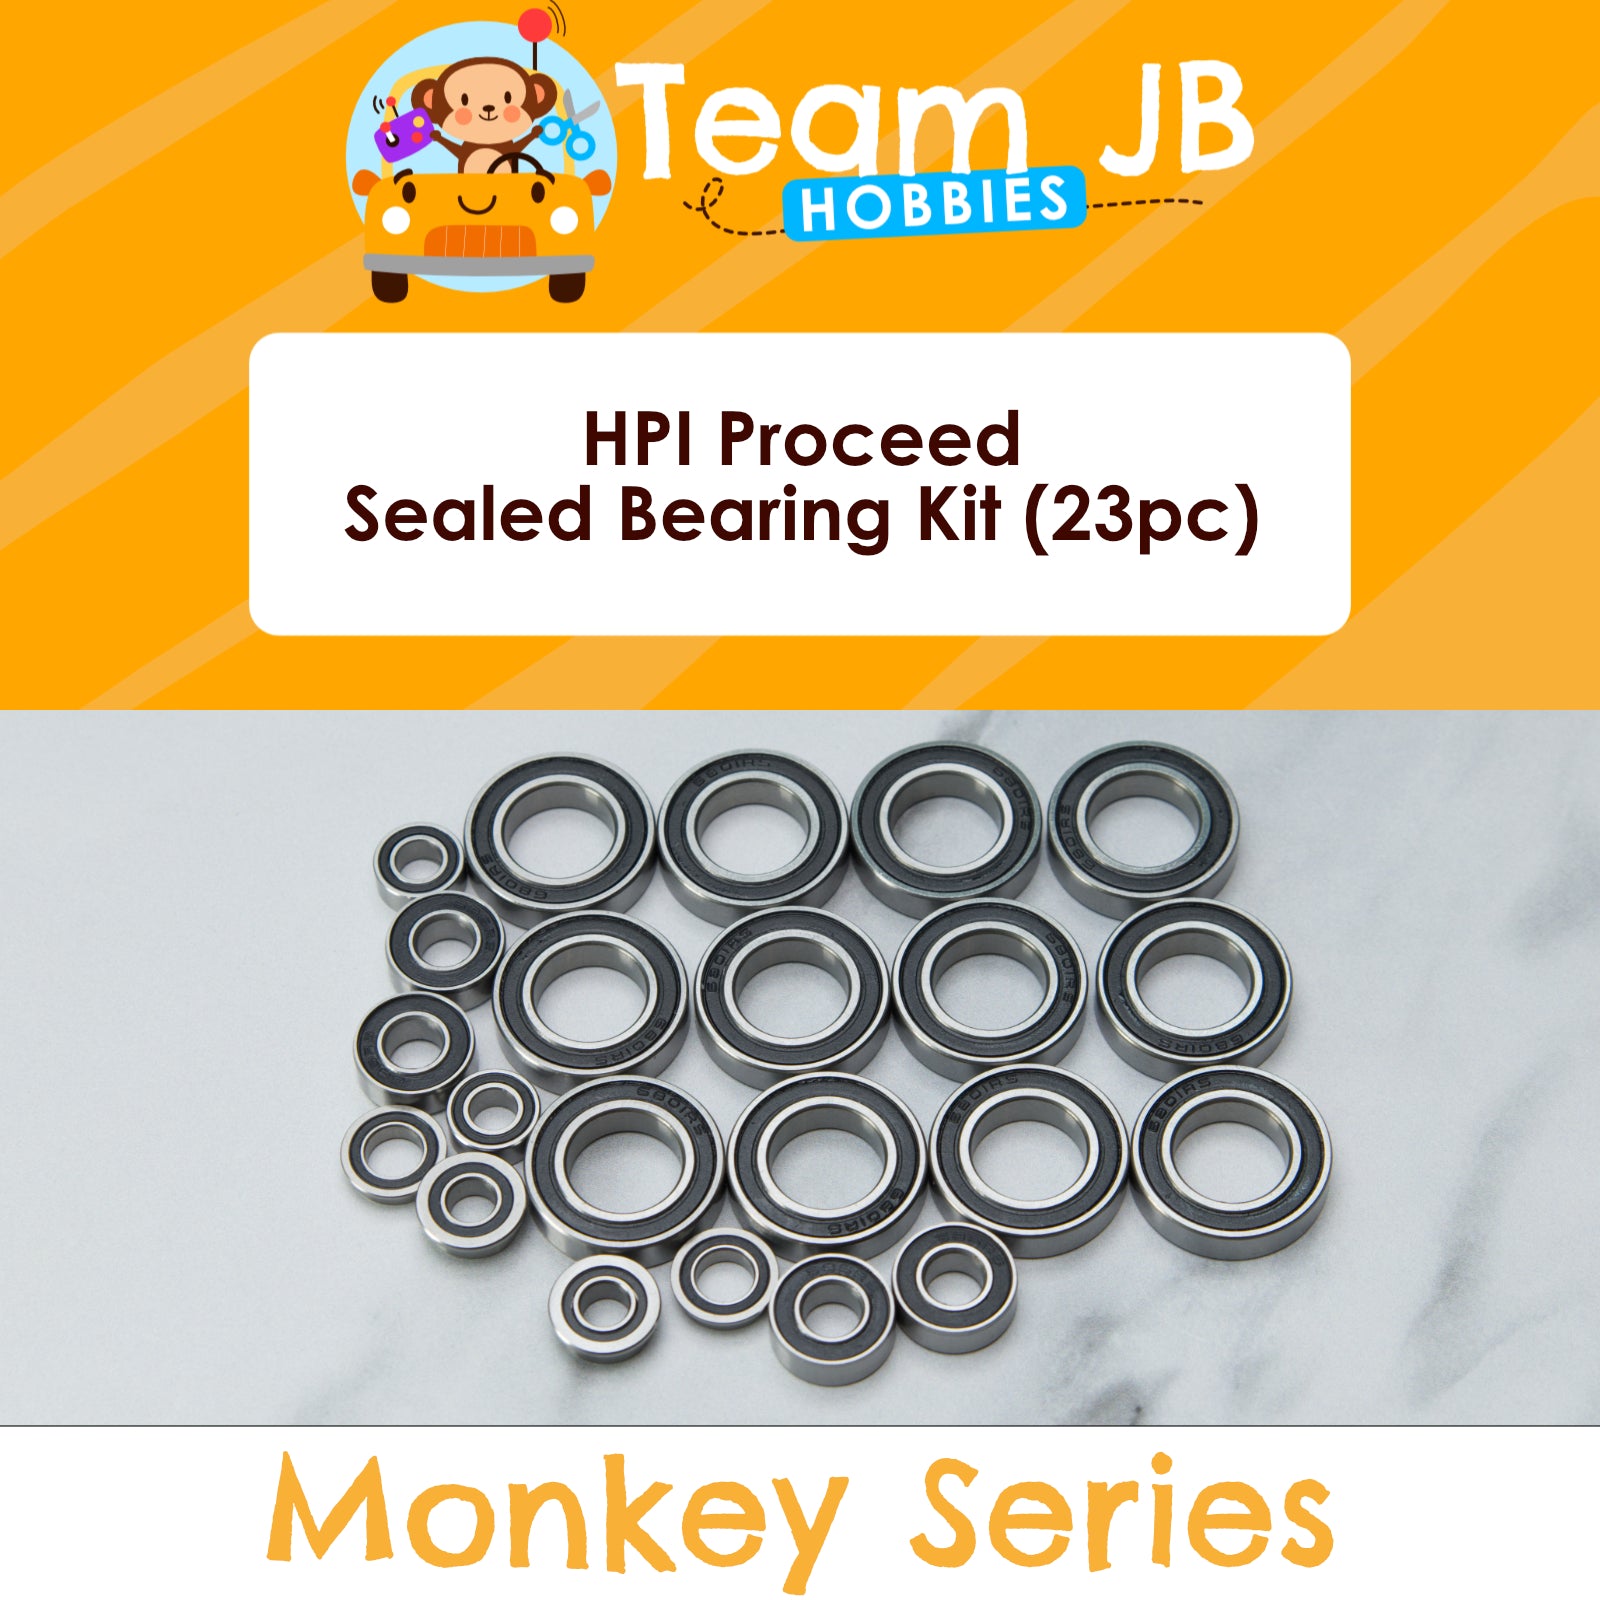 HPI Proceed - Sealed Bearing Kit